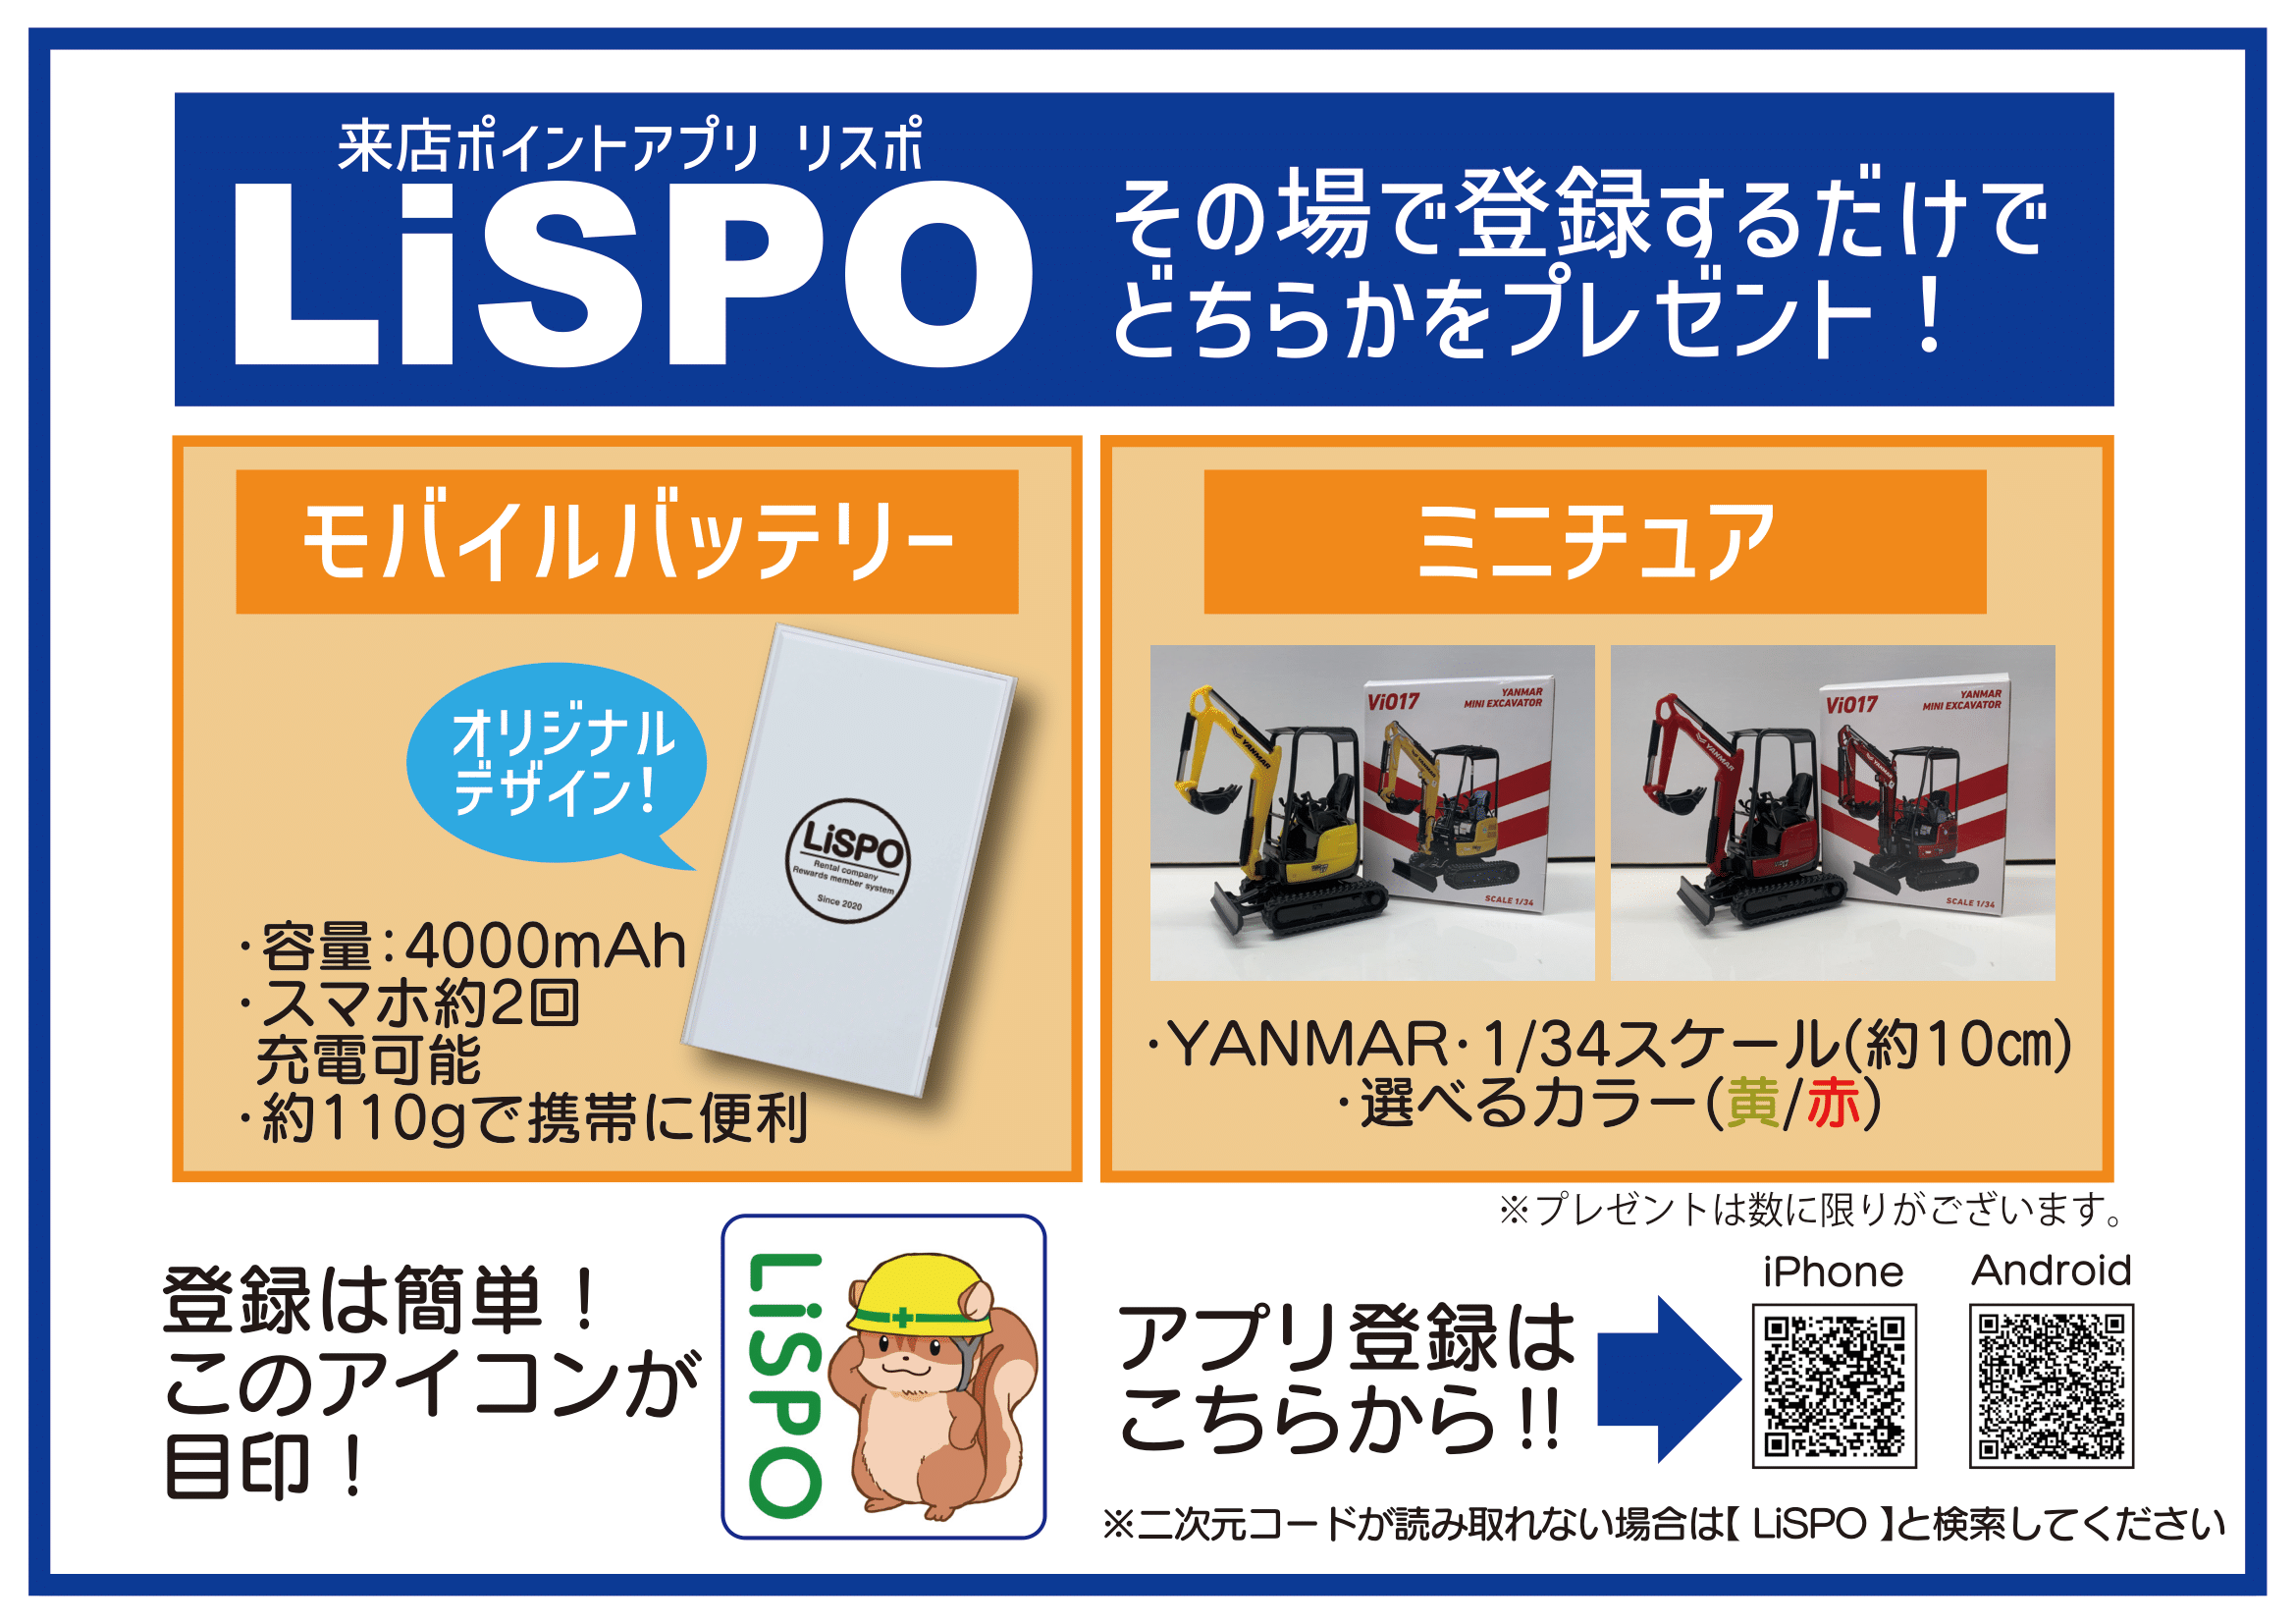 LiSPO新規登録キャンペーン